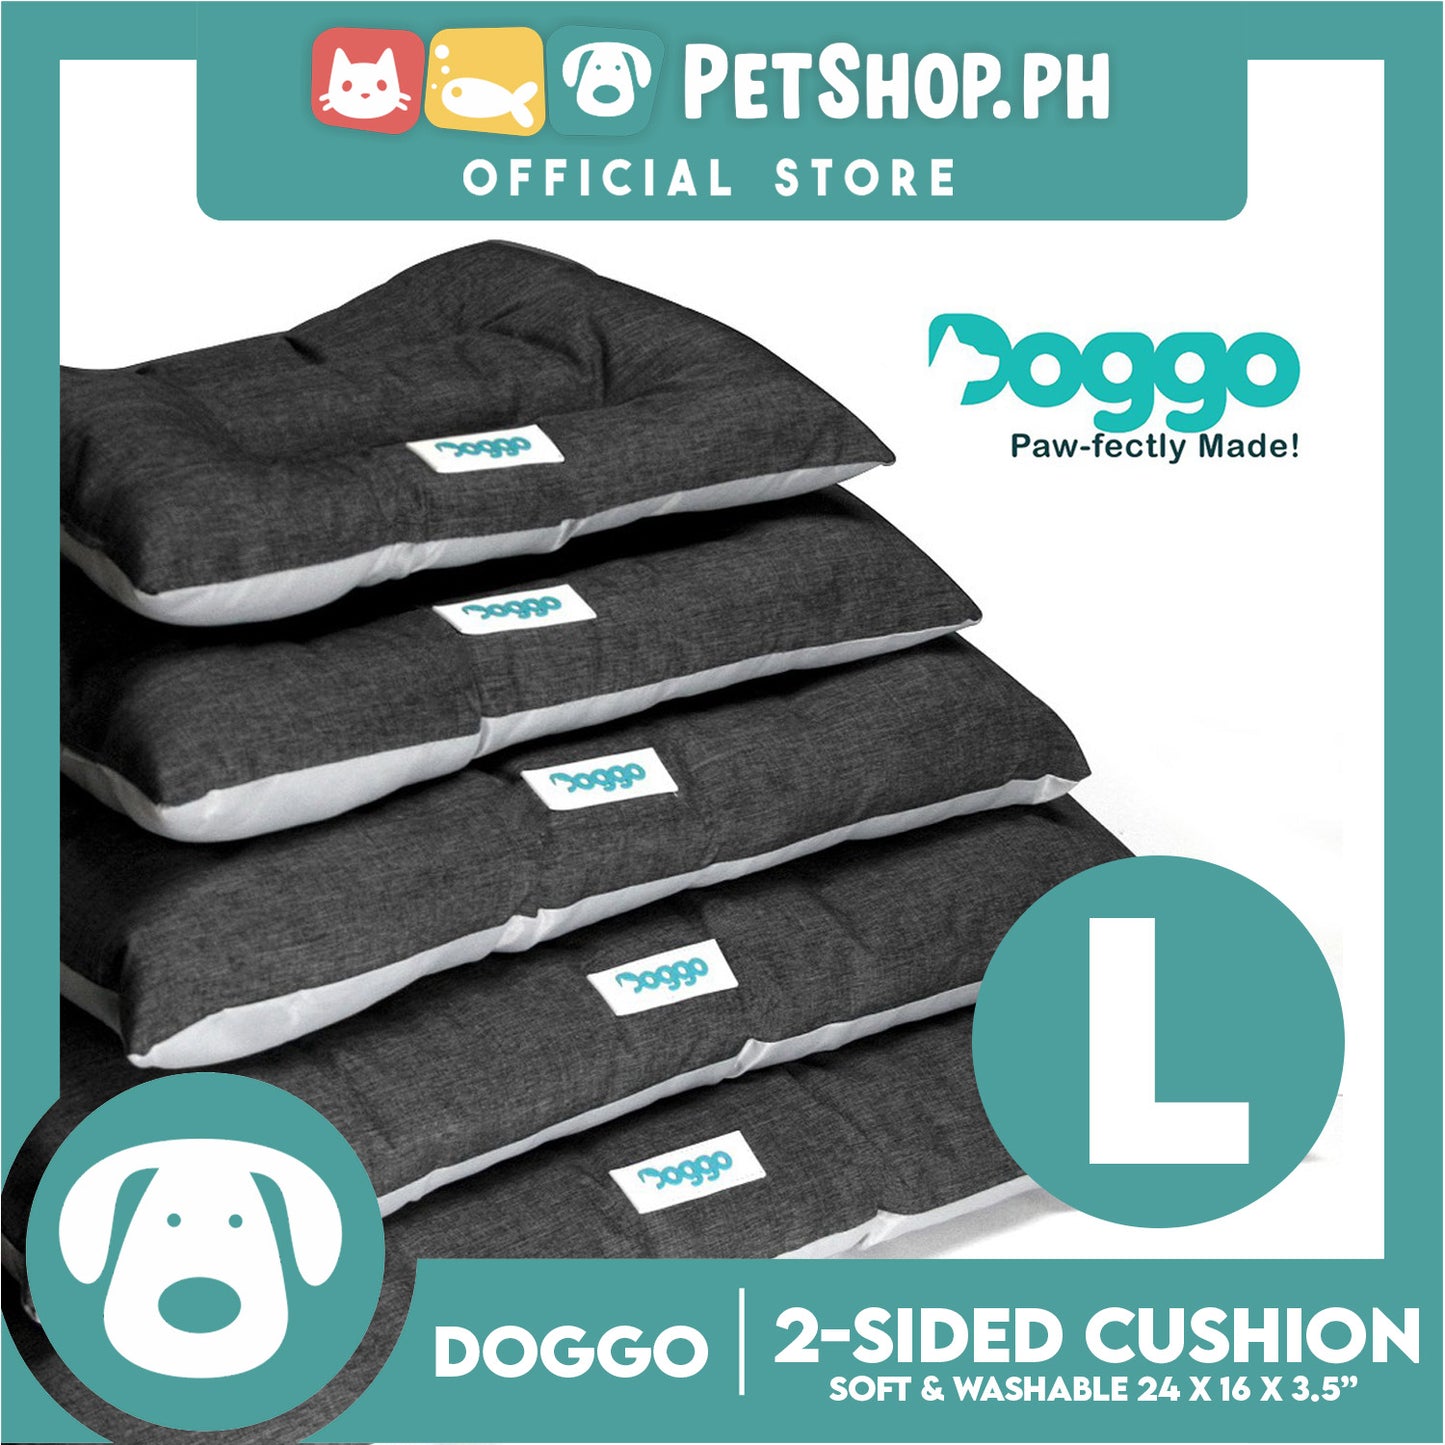 Doggo 2-Sided Cushion Bed (Large) Dog Bed Sleeping Calming Bed